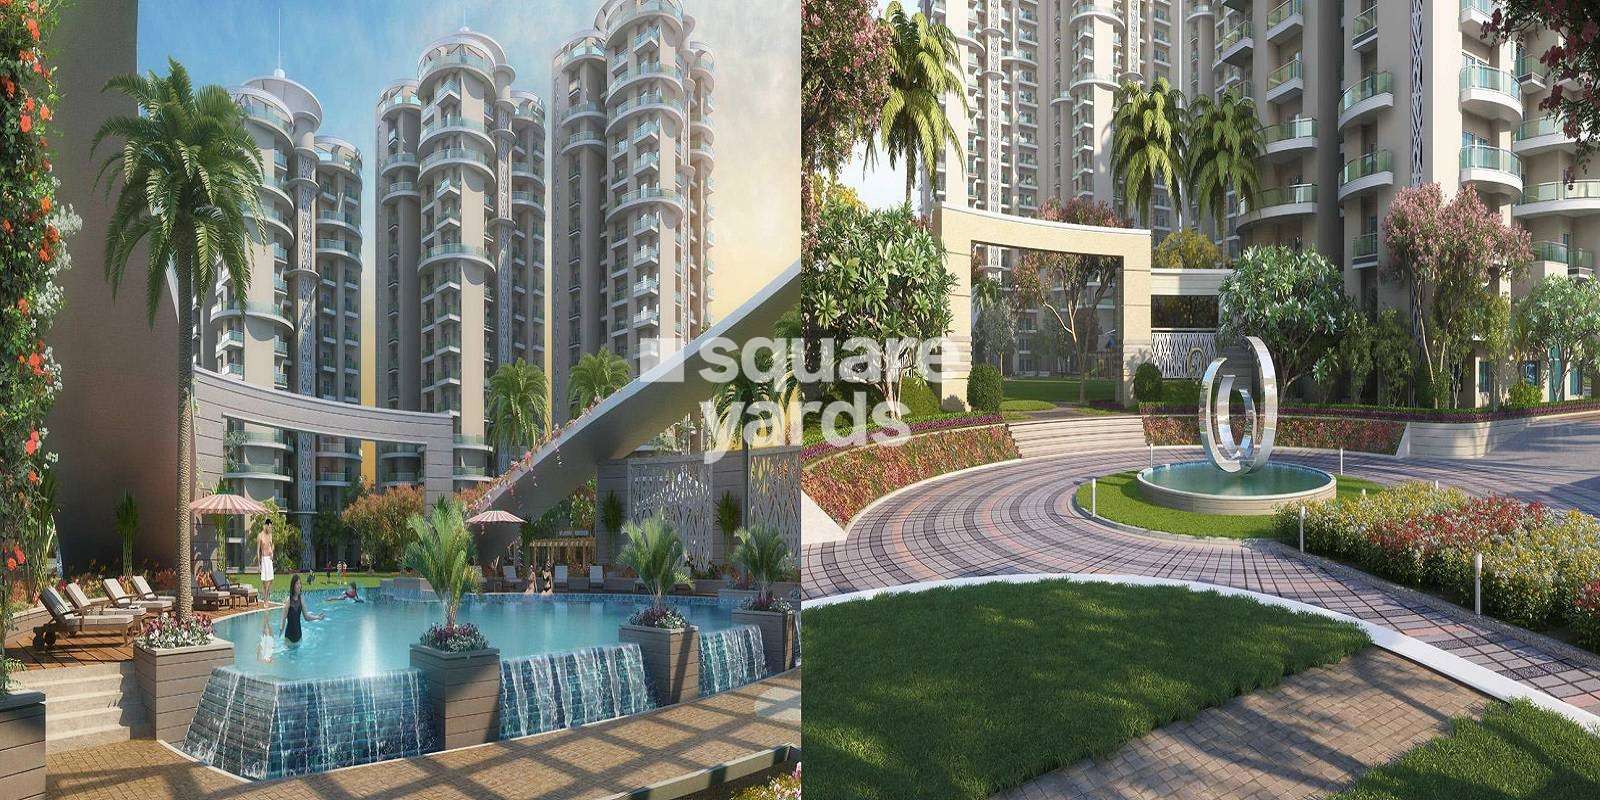 samridhi luxuriya avenue project amenities features10